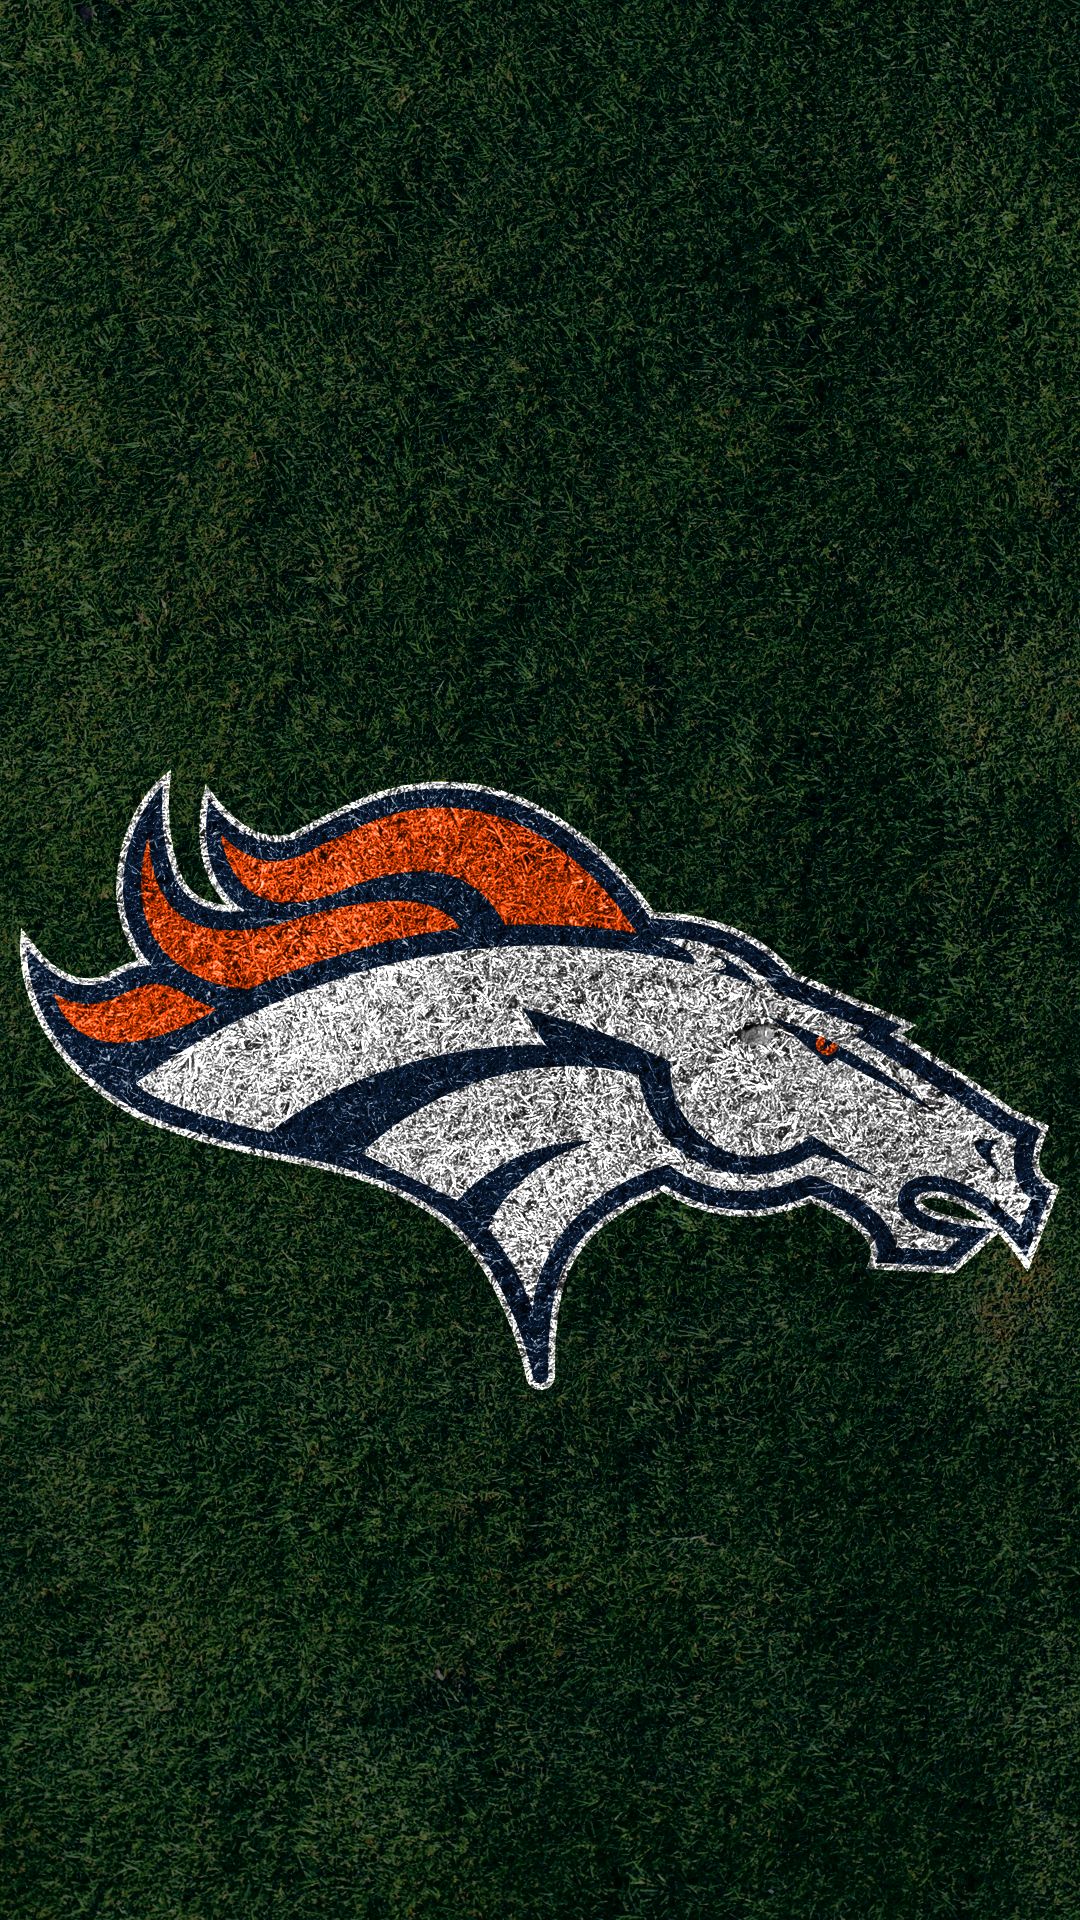 Descarga gratuita de fondo de pantalla para móvil de Fútbol, Logo, Emblema, Deporte, Broncos De Denver, Nfl.